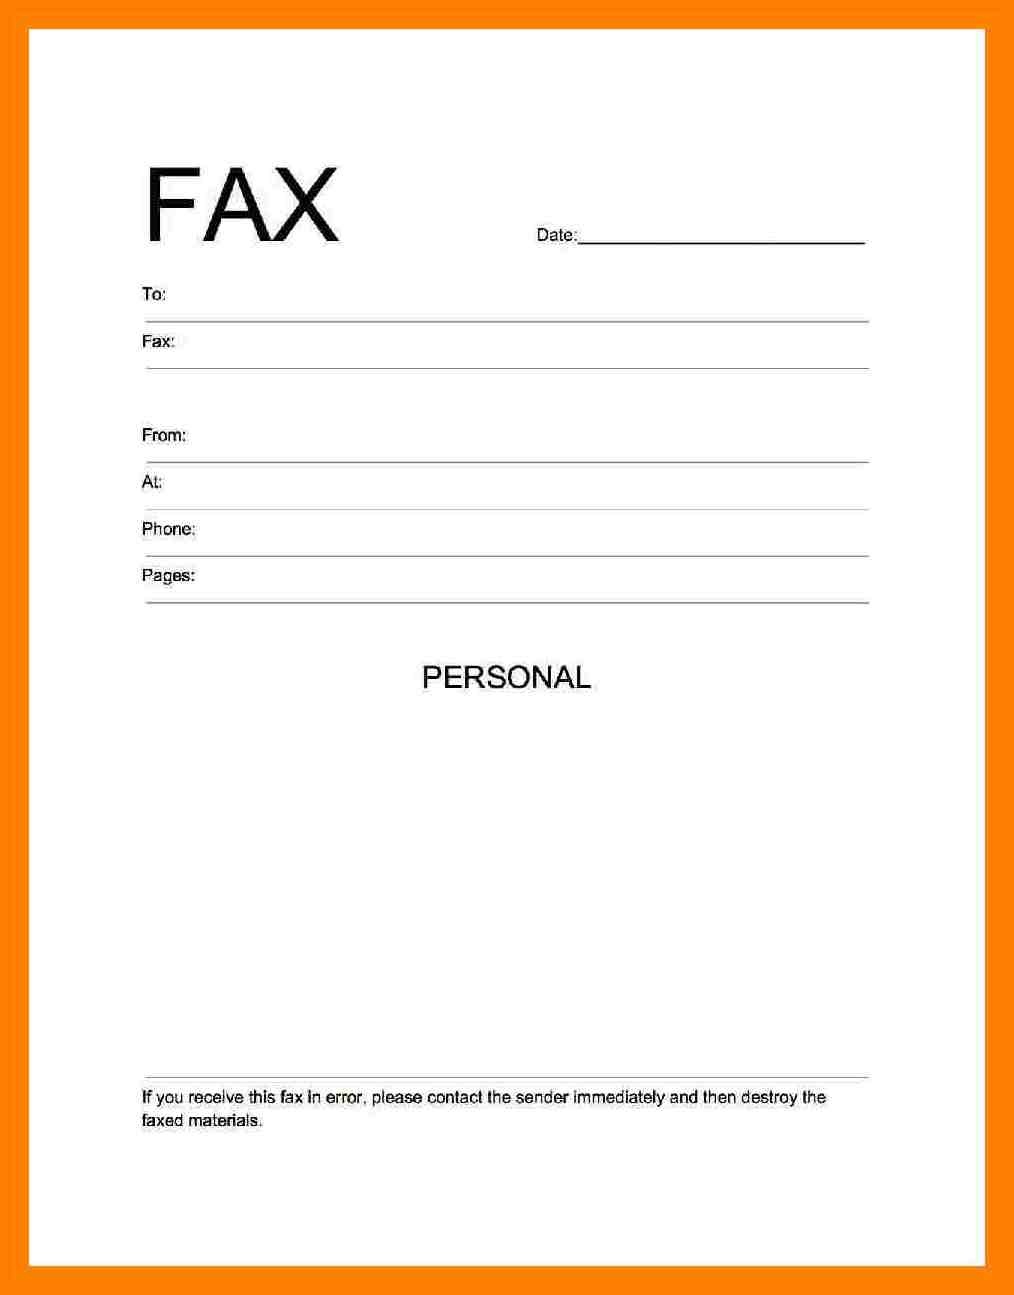 Fax Cover Sheet Pdf Free Download - Free Printable Fax Cover Sheet Pdf